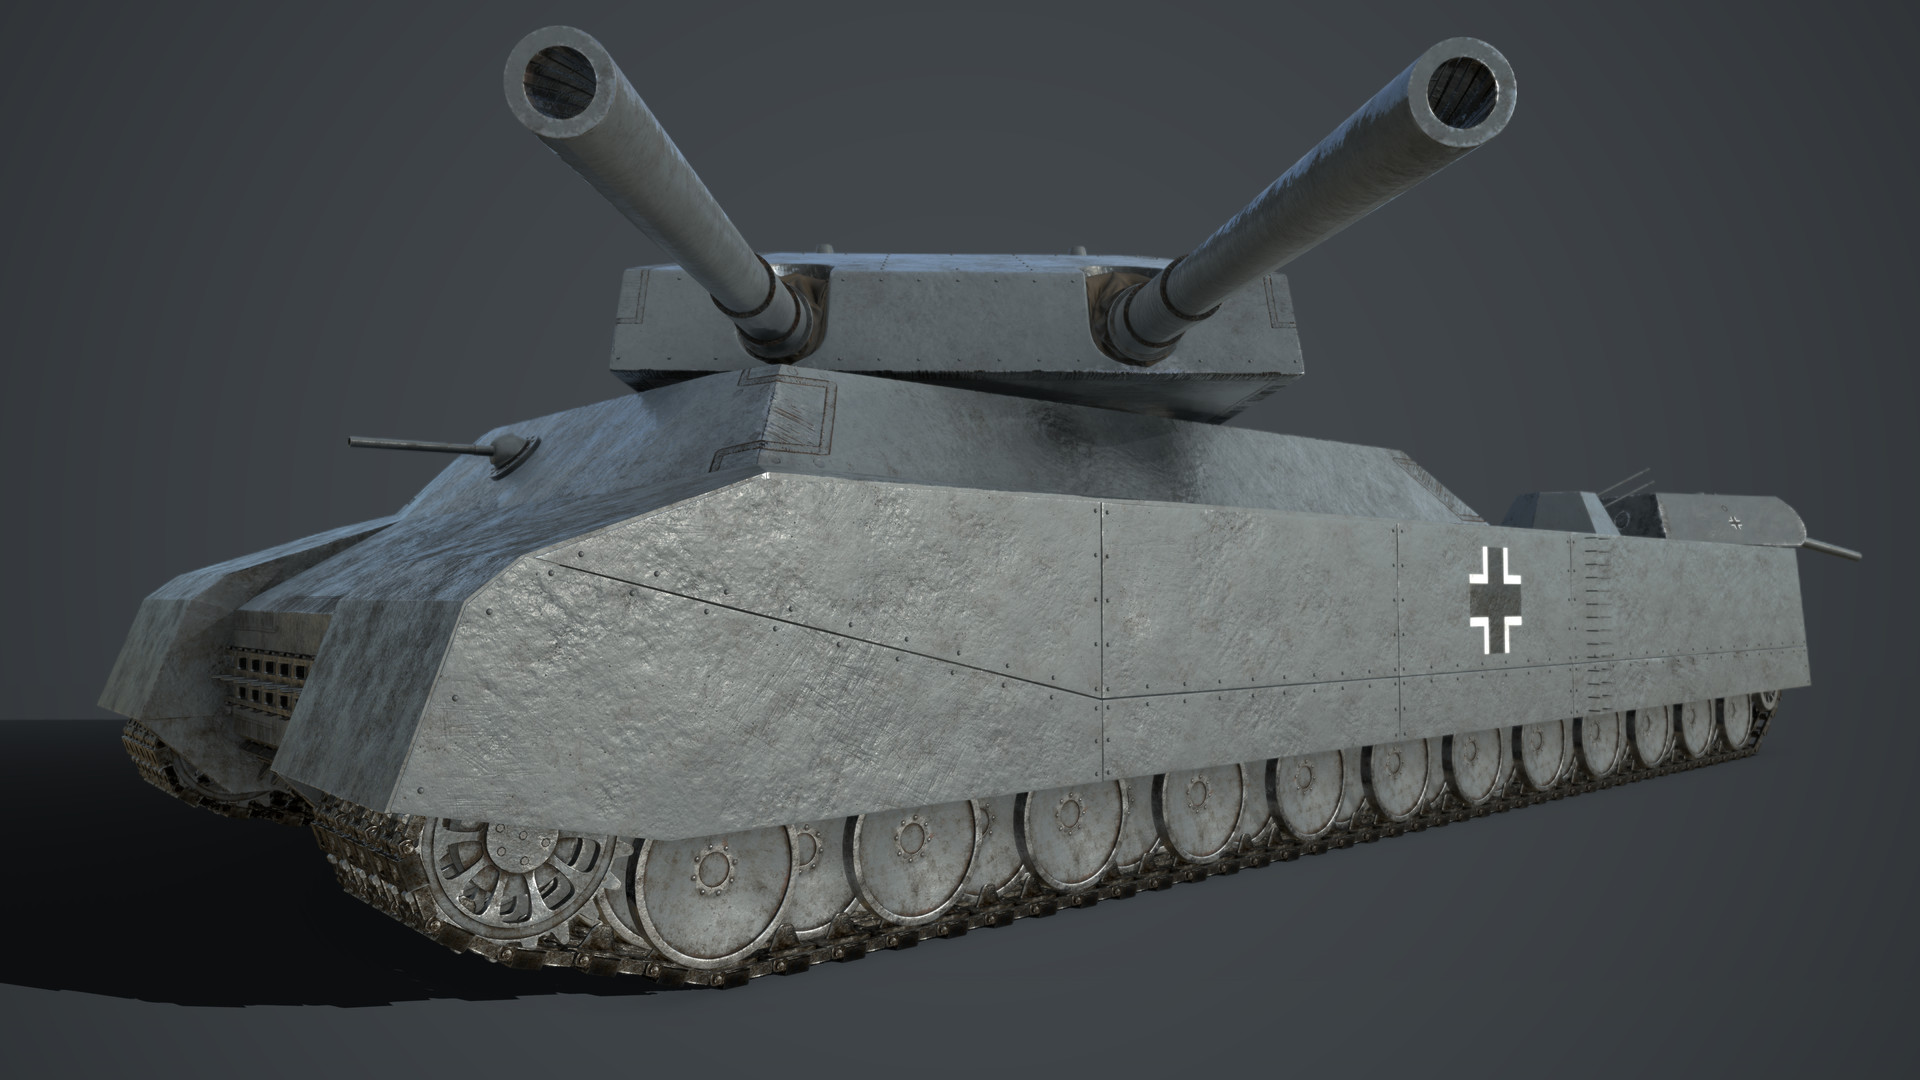 Tank 1000. Танк р1000 Ratte. Танк p1000 крыса. Немецкий танк РАТТЕ. Модель танка Landkreuzer p.1000 Ratte.